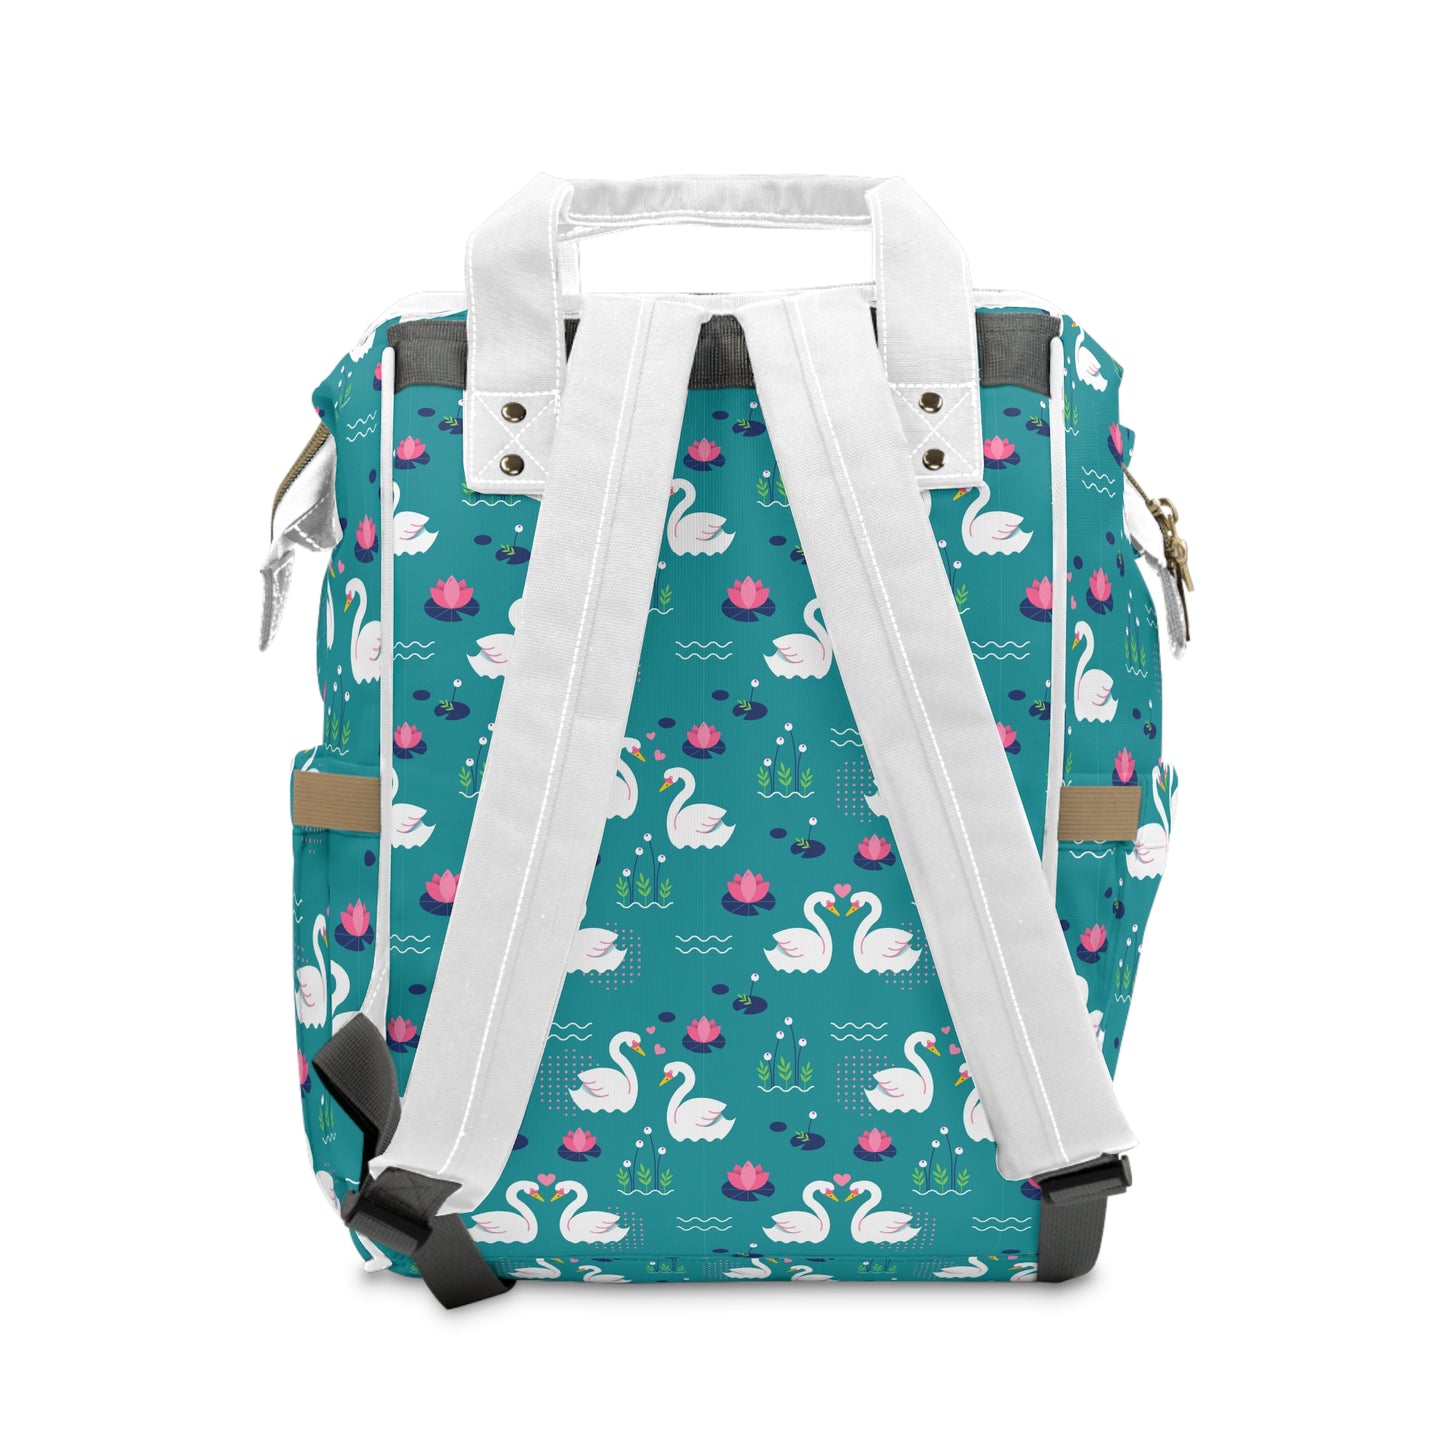 Niccie's Swan Pattern Diaper Backpack: Stylish & Versatile Baby Bag